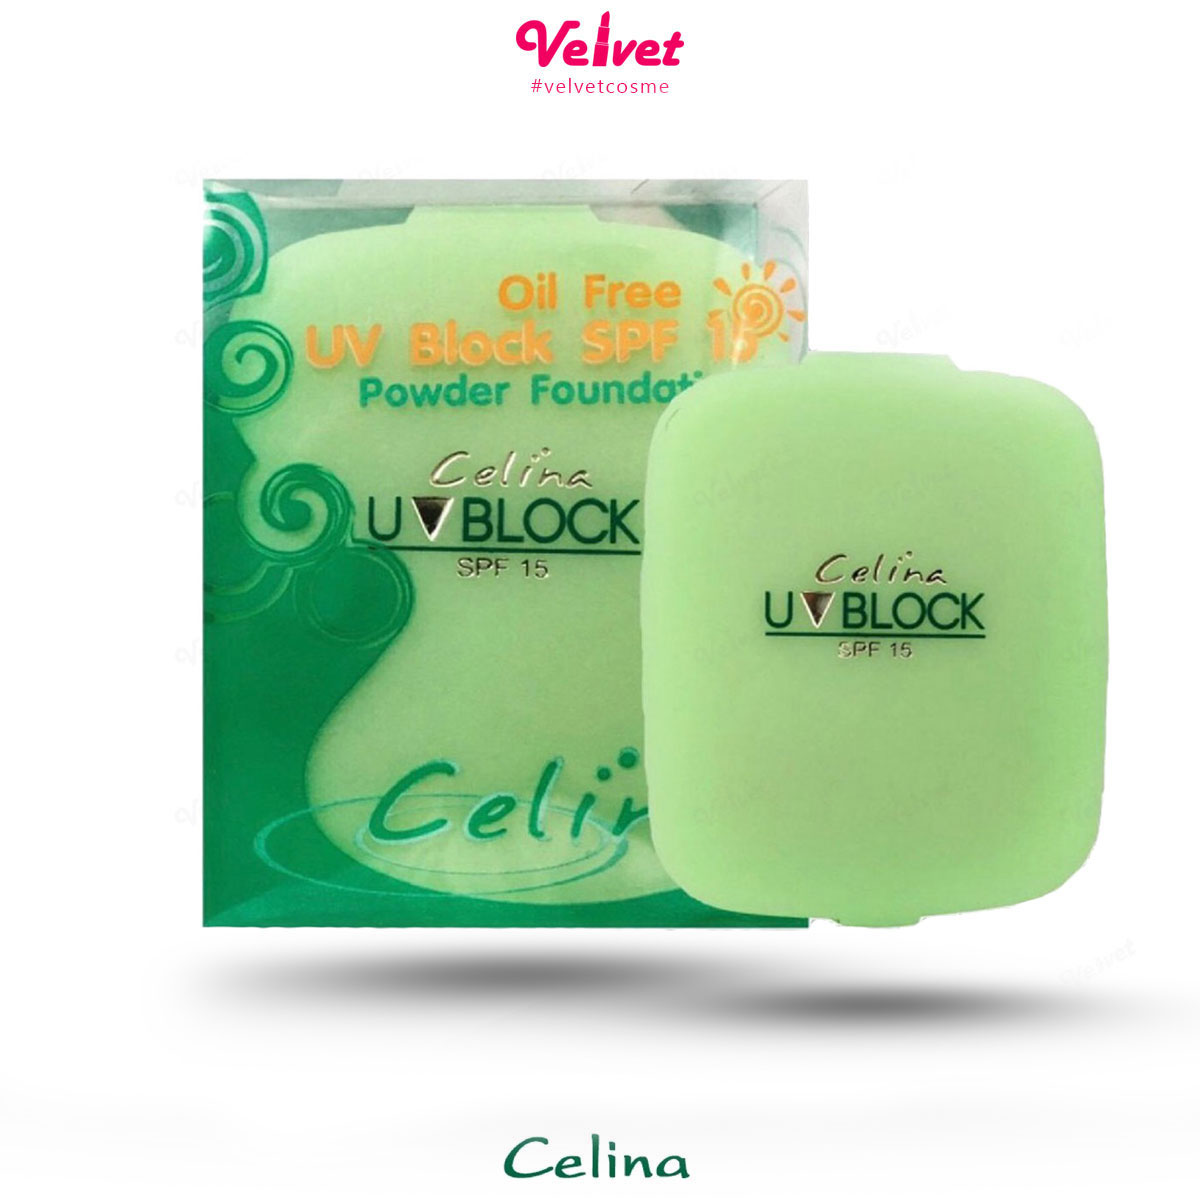 Celina UV Block SPF 15 Powder Foundation แป้งพริตตี้ แป้ง เซลีน่า เซลิน่า ยูวีบล็อก แป้งผสมรองพื้น สูตร Oil Free รีฟิล (velvetcosme)